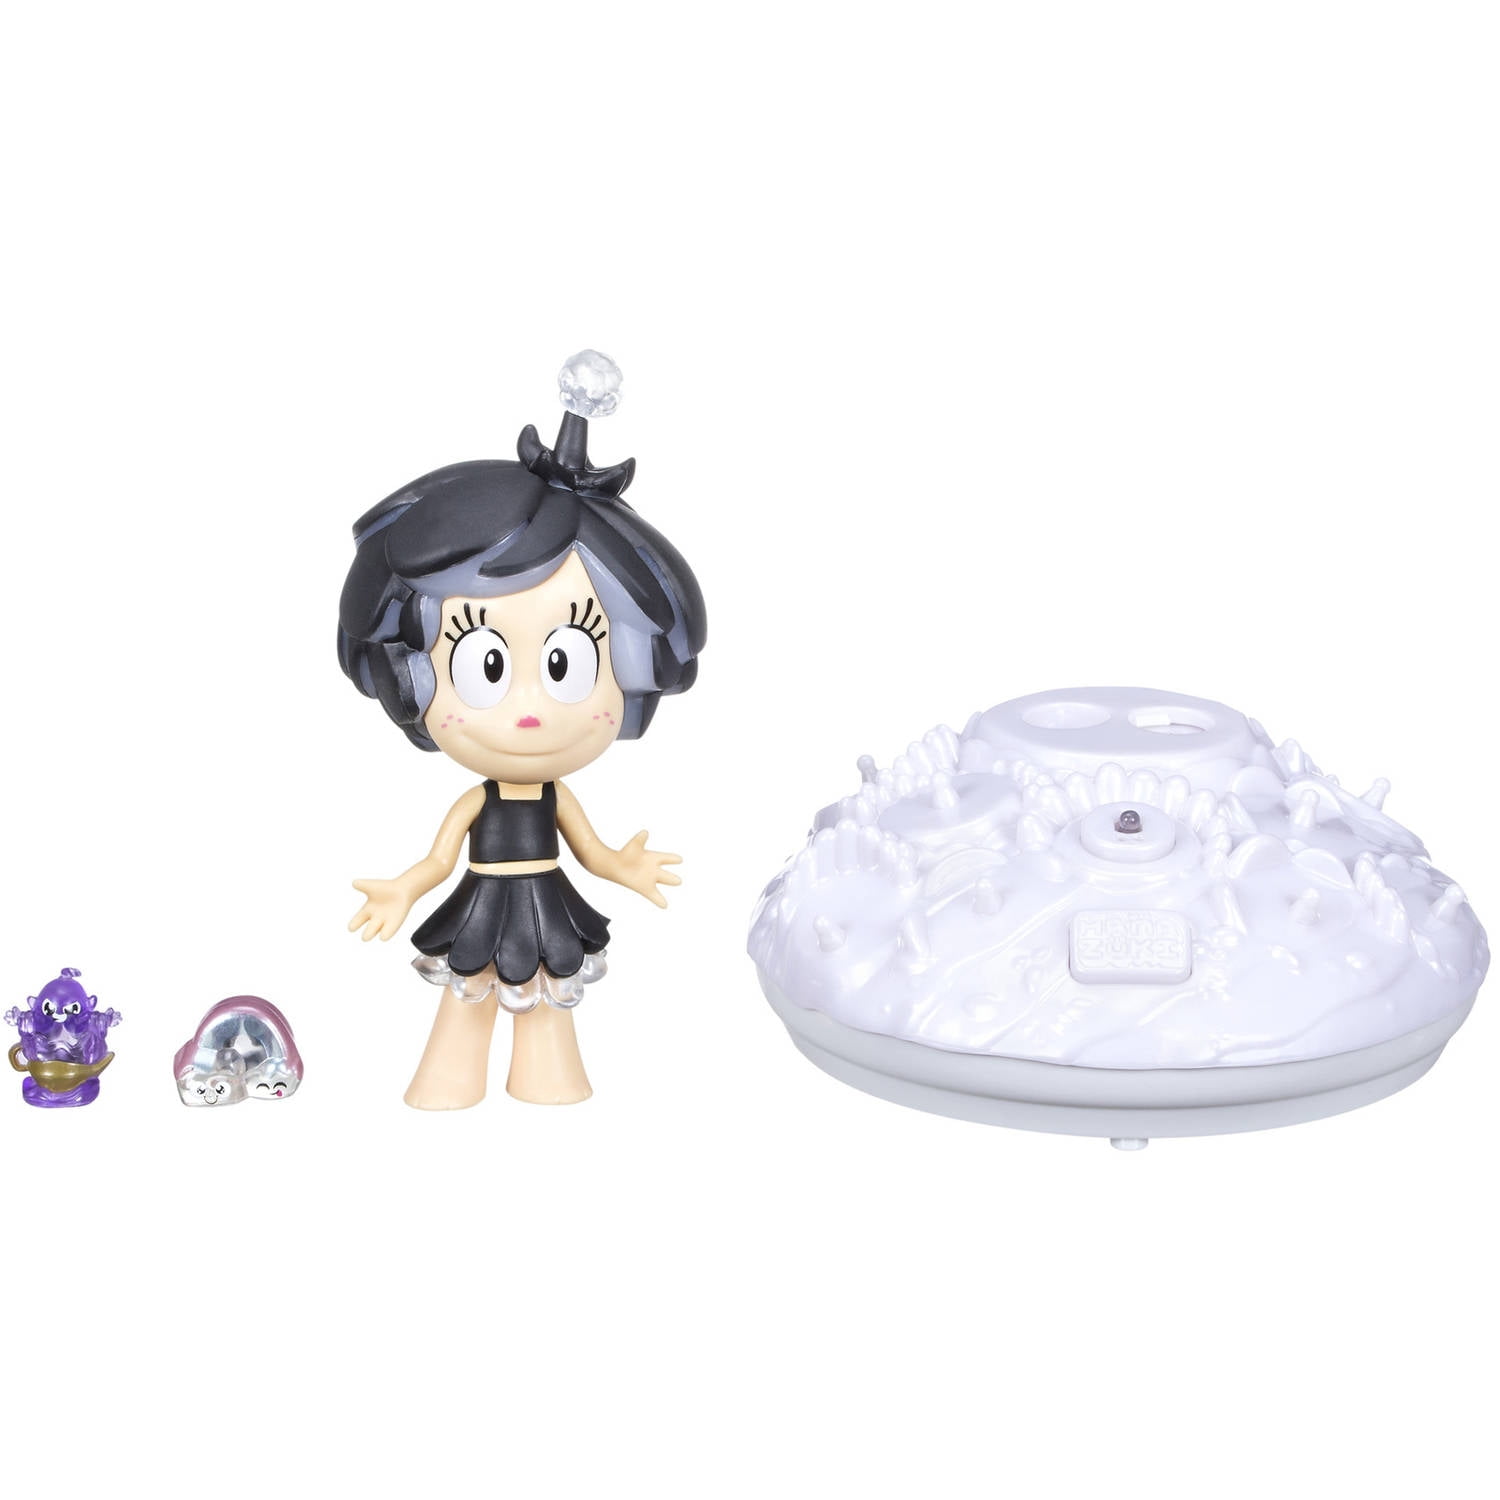 Hanazuki Full of Treasures Moodlight Garden Doll Playset Hasbro Glows Lights up